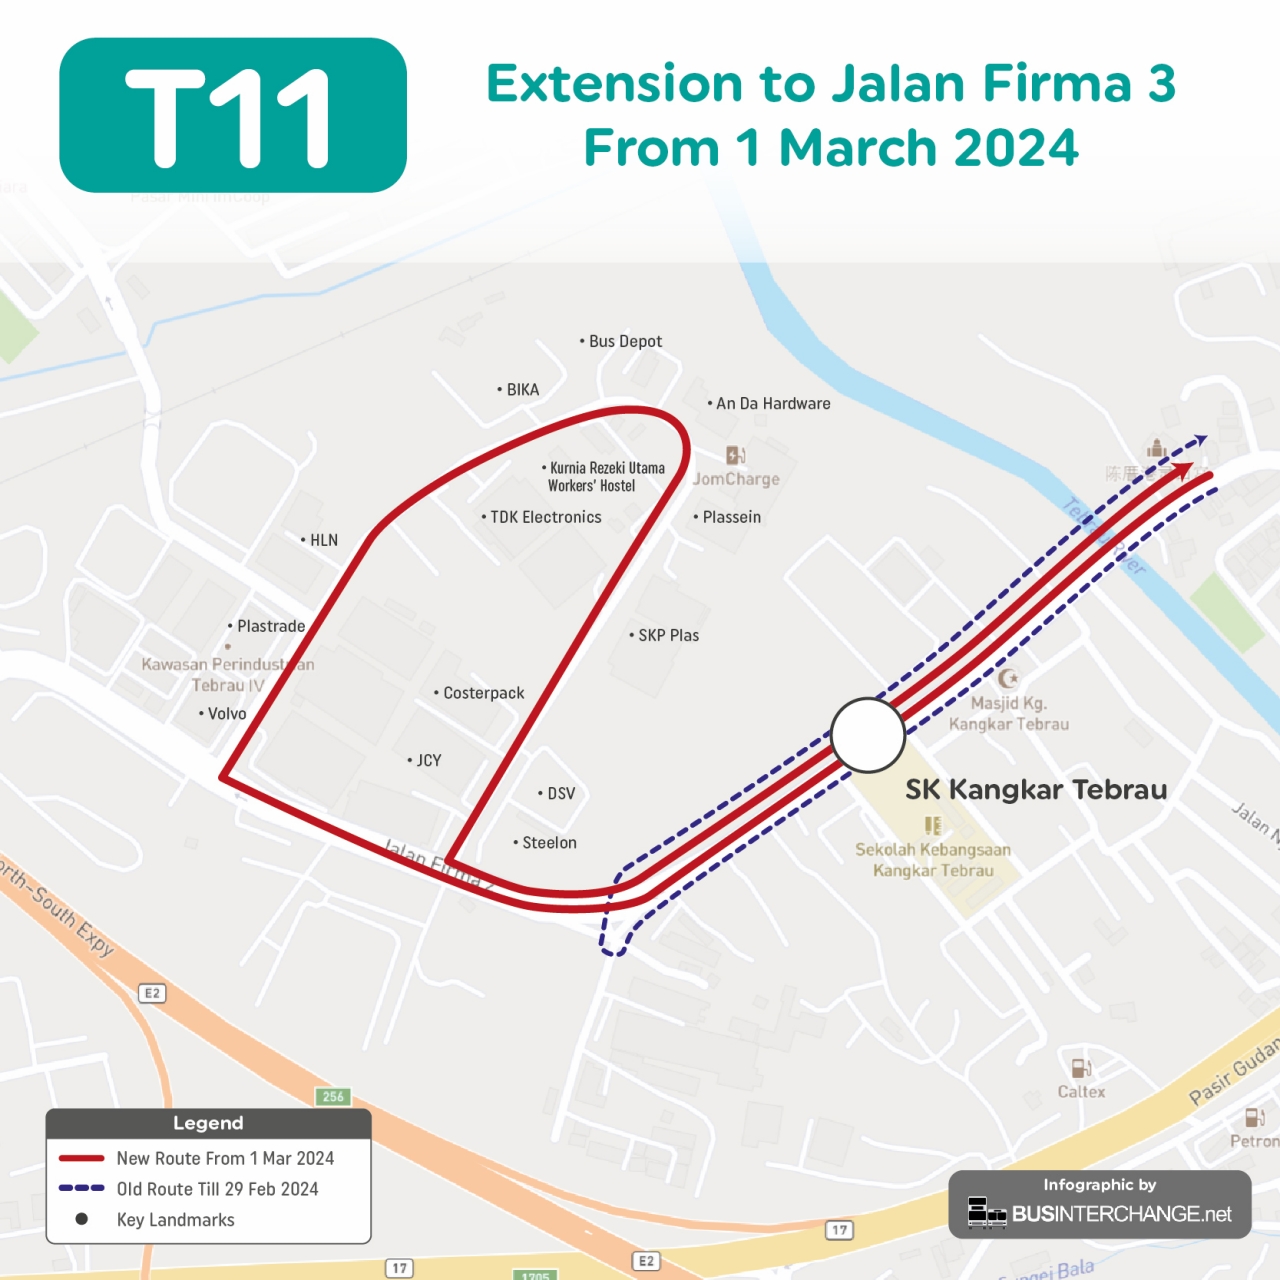 myBas Johor Bahru Route T11 extends to Kawasan Perindustrian Tebrau IV from 1 March 2024